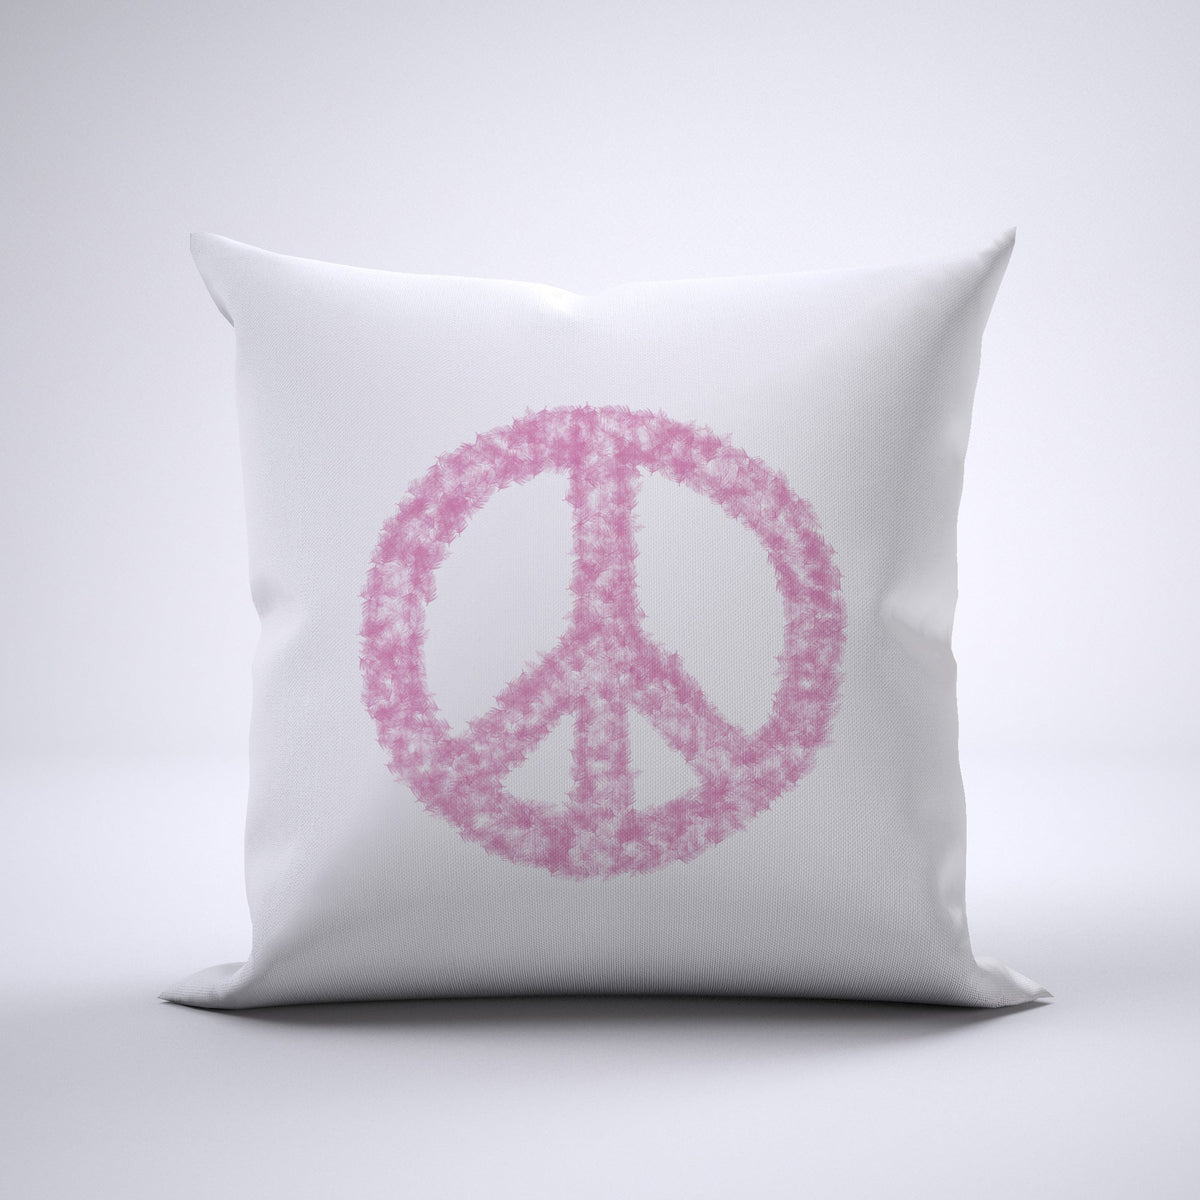 Throw Pillow - Peace Plumes Hot Pink Bedding, Pillows, Throw Pillows MWW 